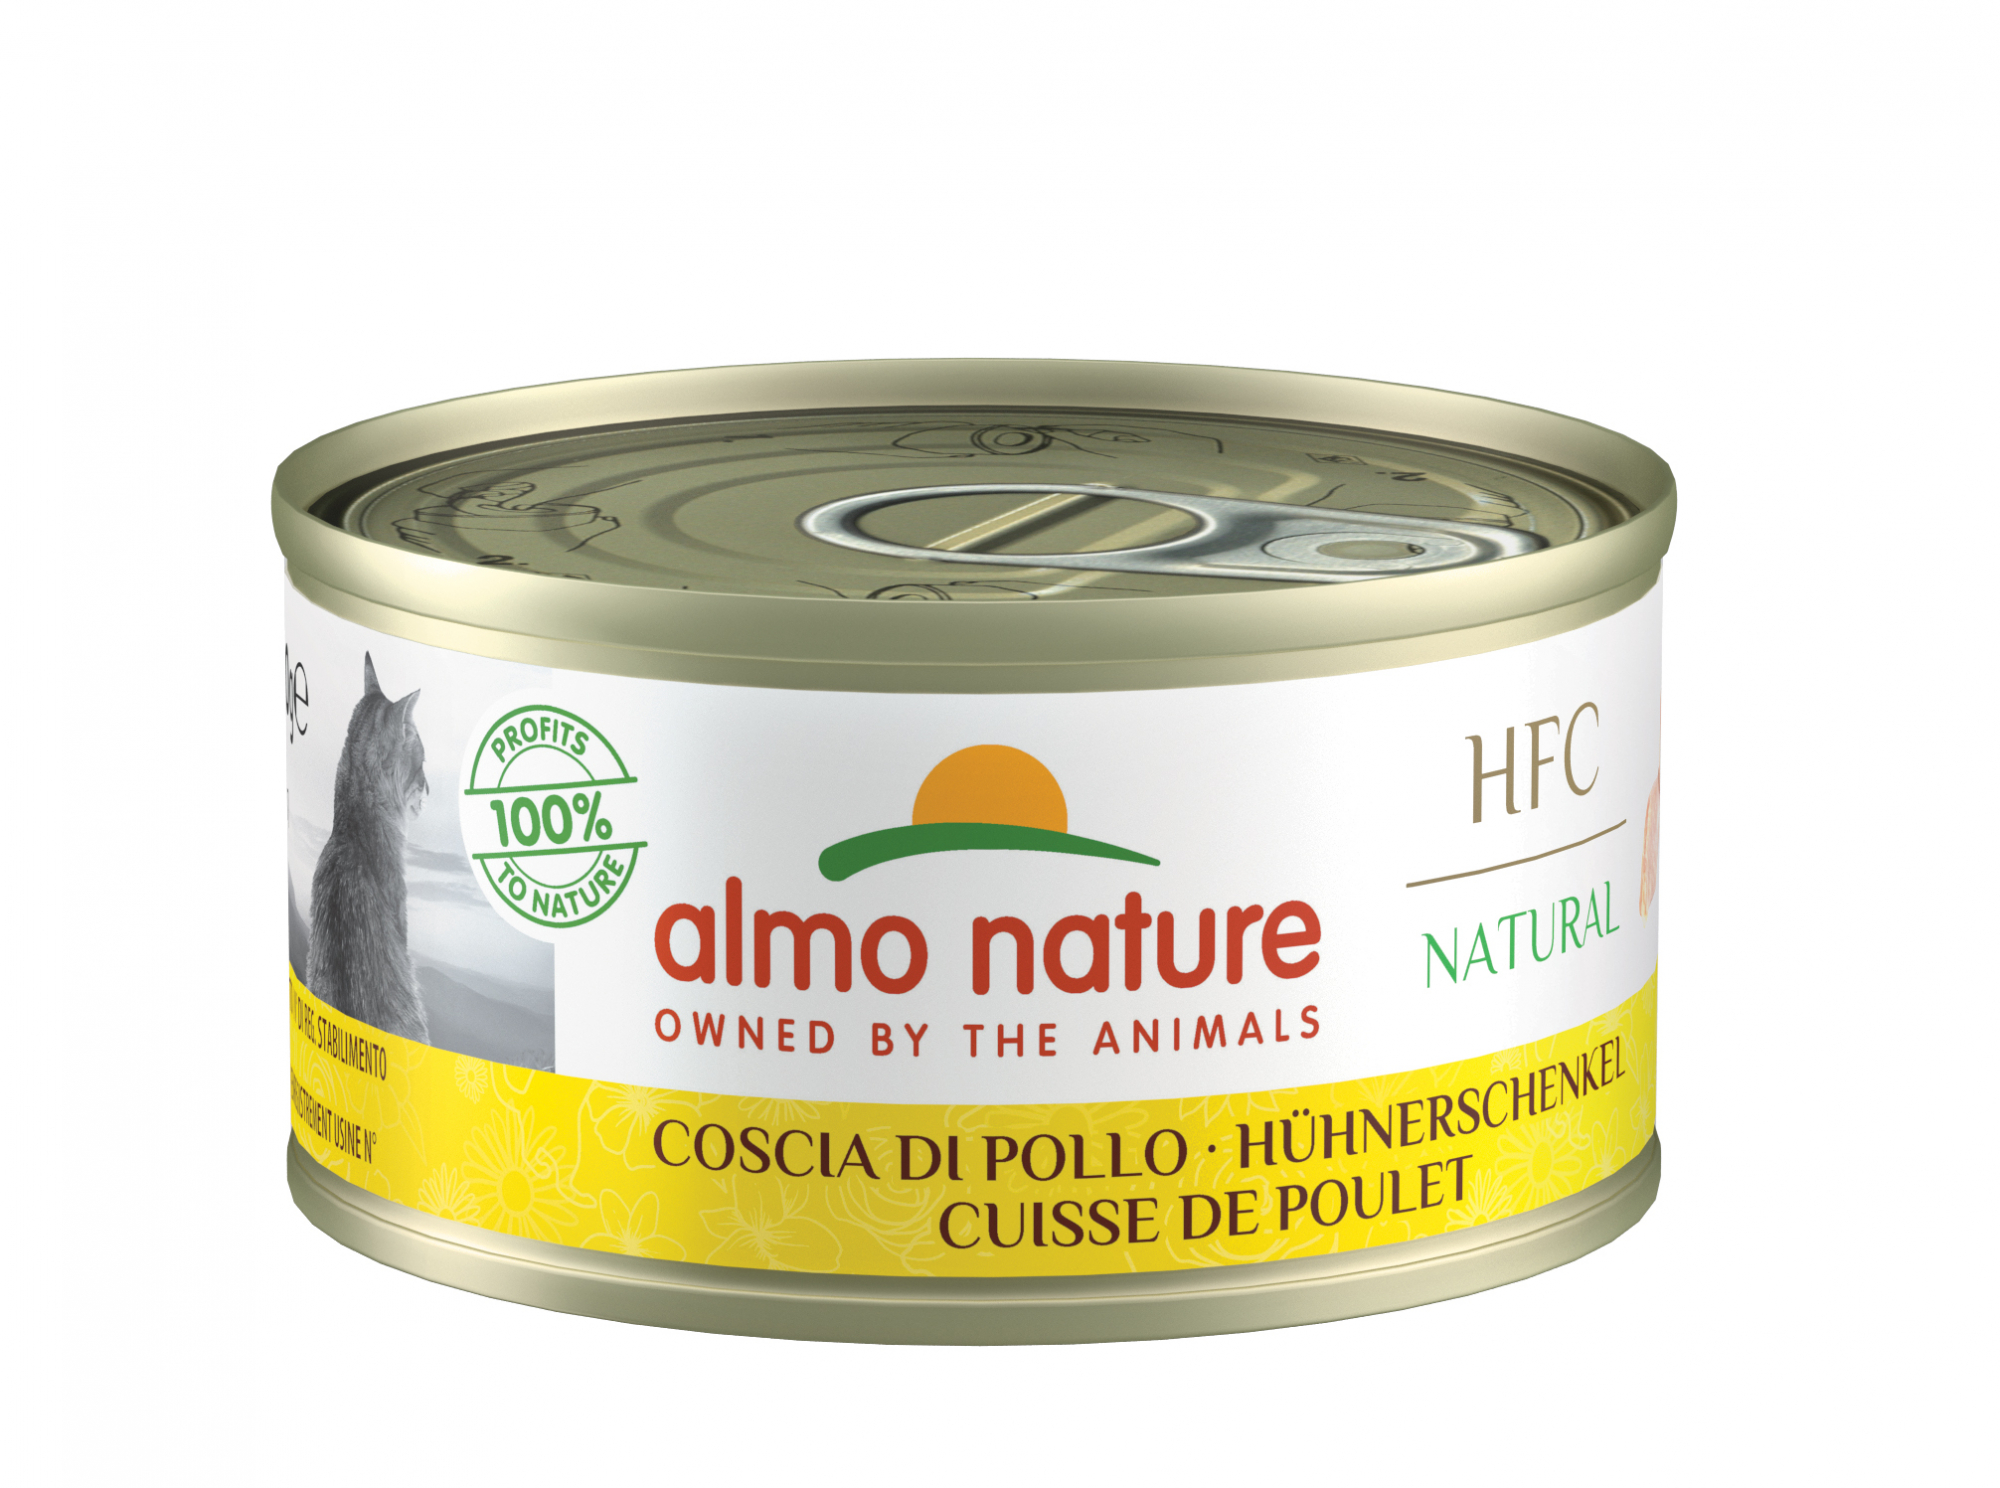 Almo Nature HFC Natural o Gelatina 70g Latas para gatos - 10 recetas para escoger